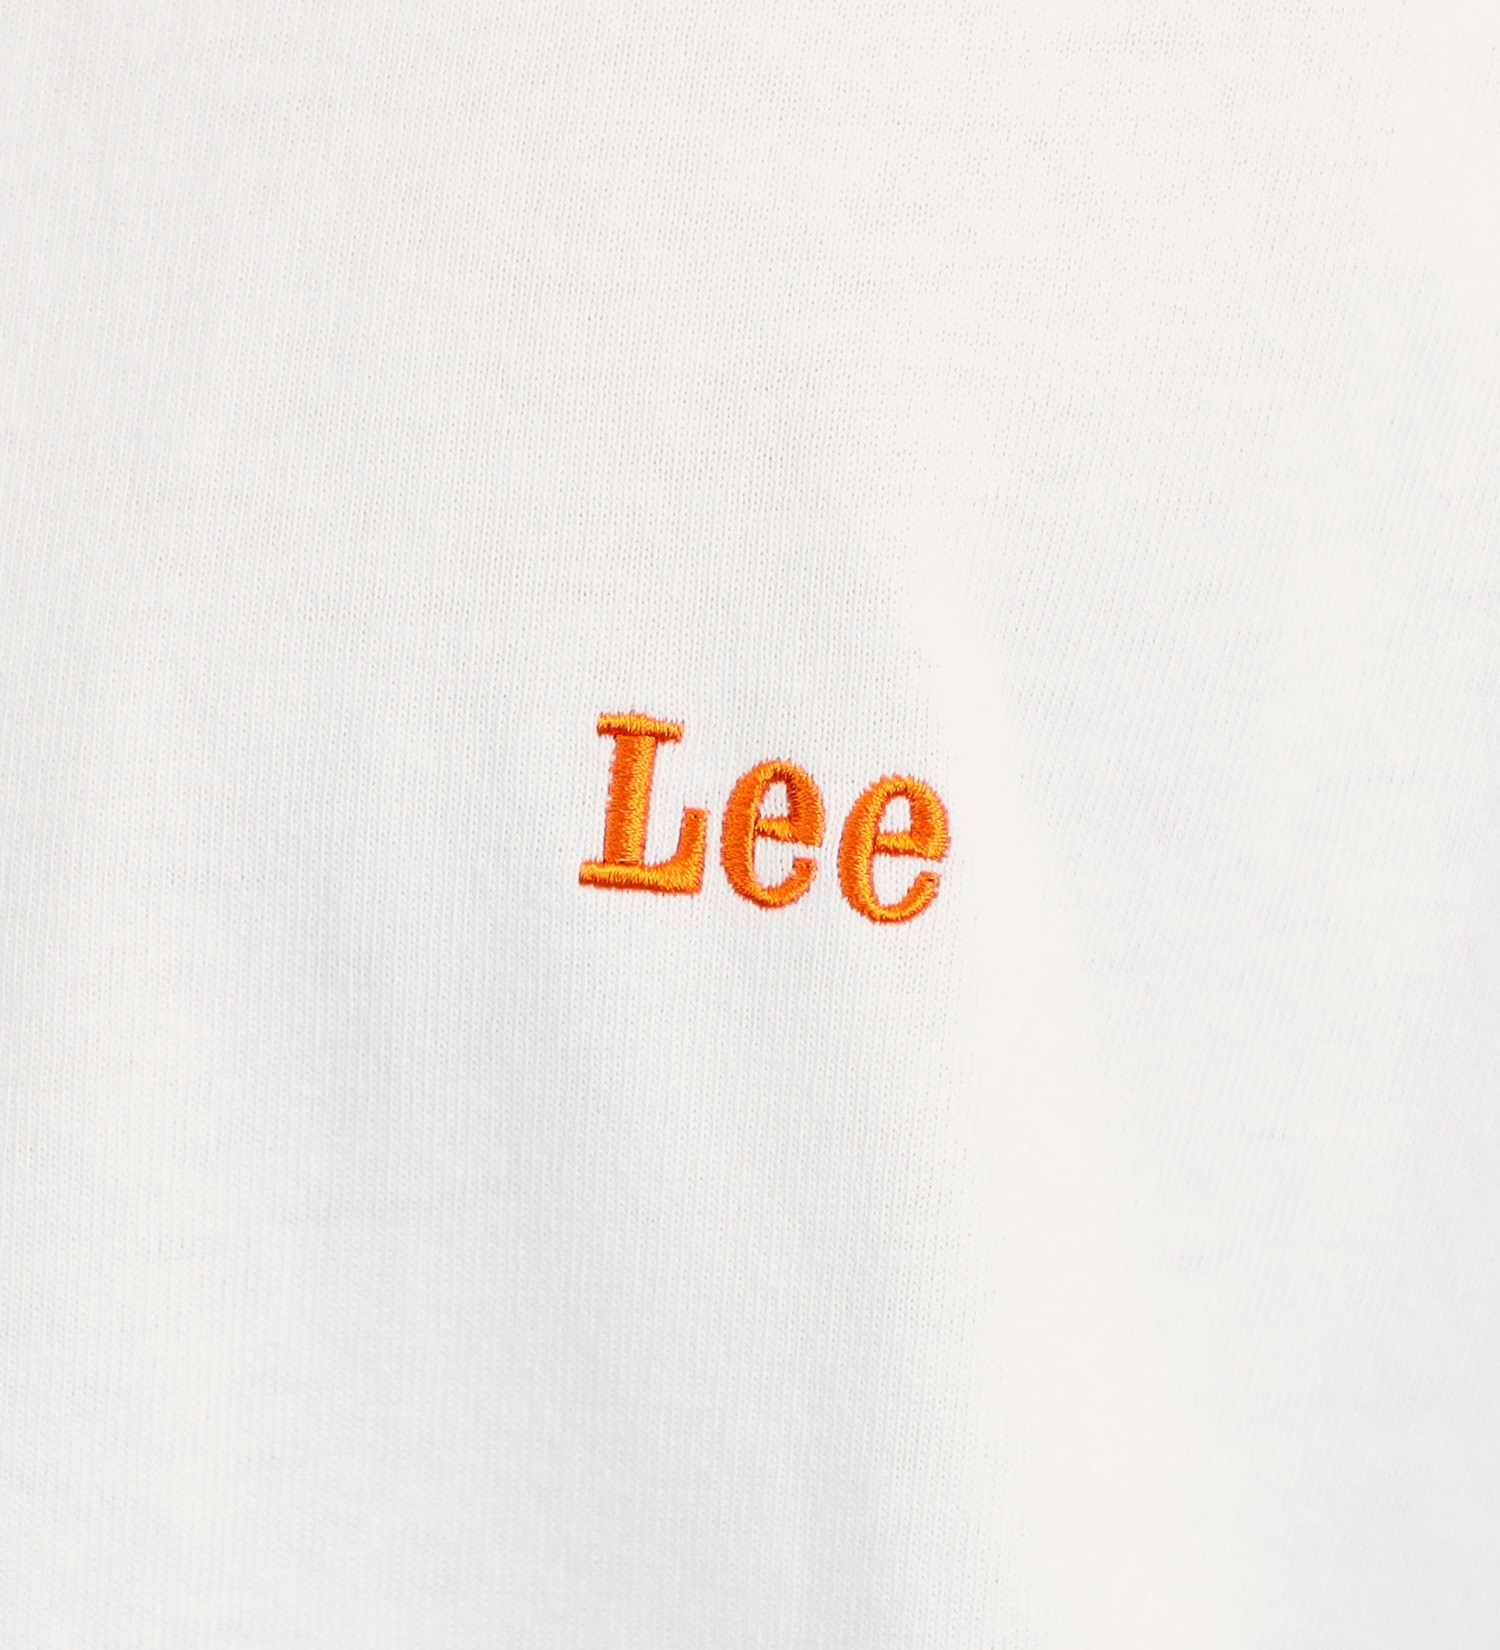 Lee(リー)のバックプリント オールドアド ネオン ショートスリーブTee|トップス/Tシャツ/カットソー/メンズ|ホワイト